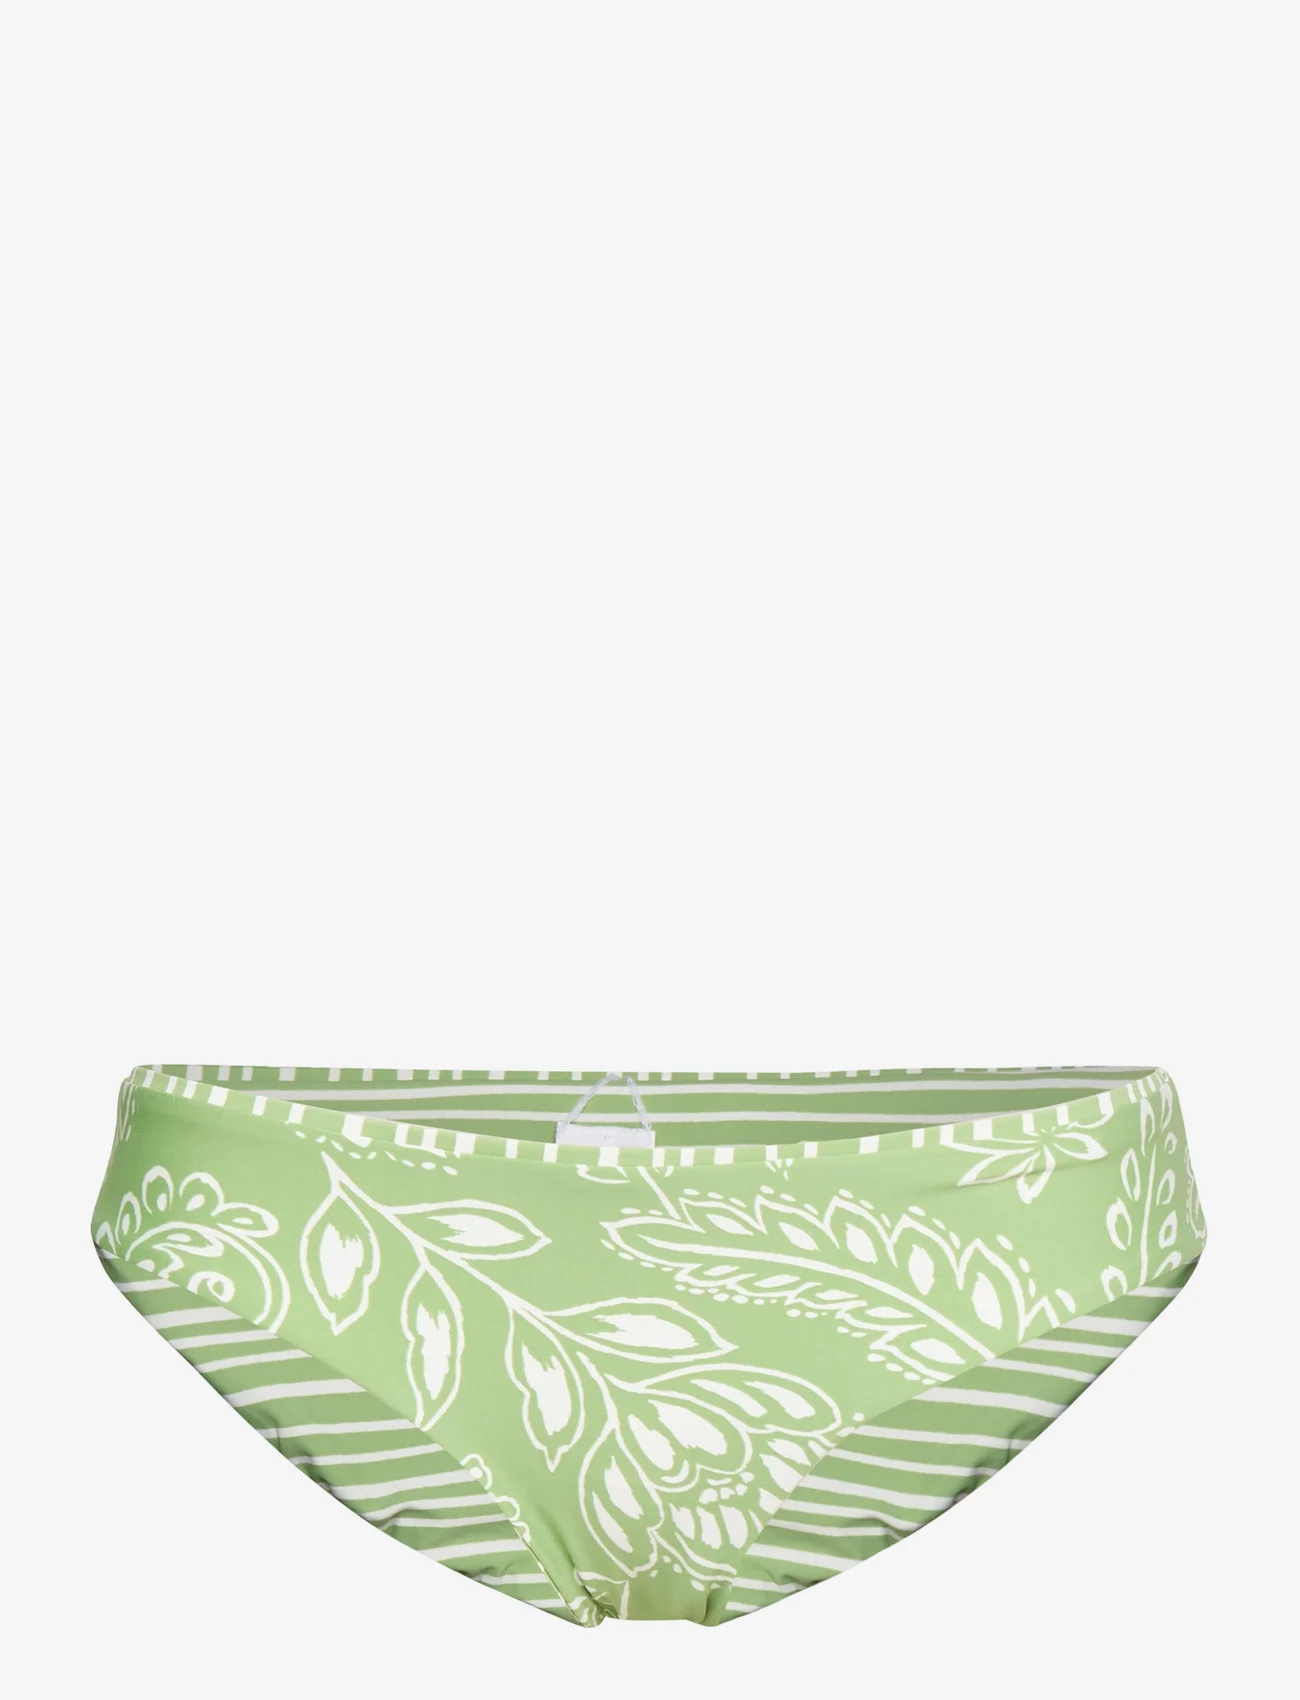 Seafolly - Folklore Reversible Hipster Pant - bikinibriefs - green tea - 0